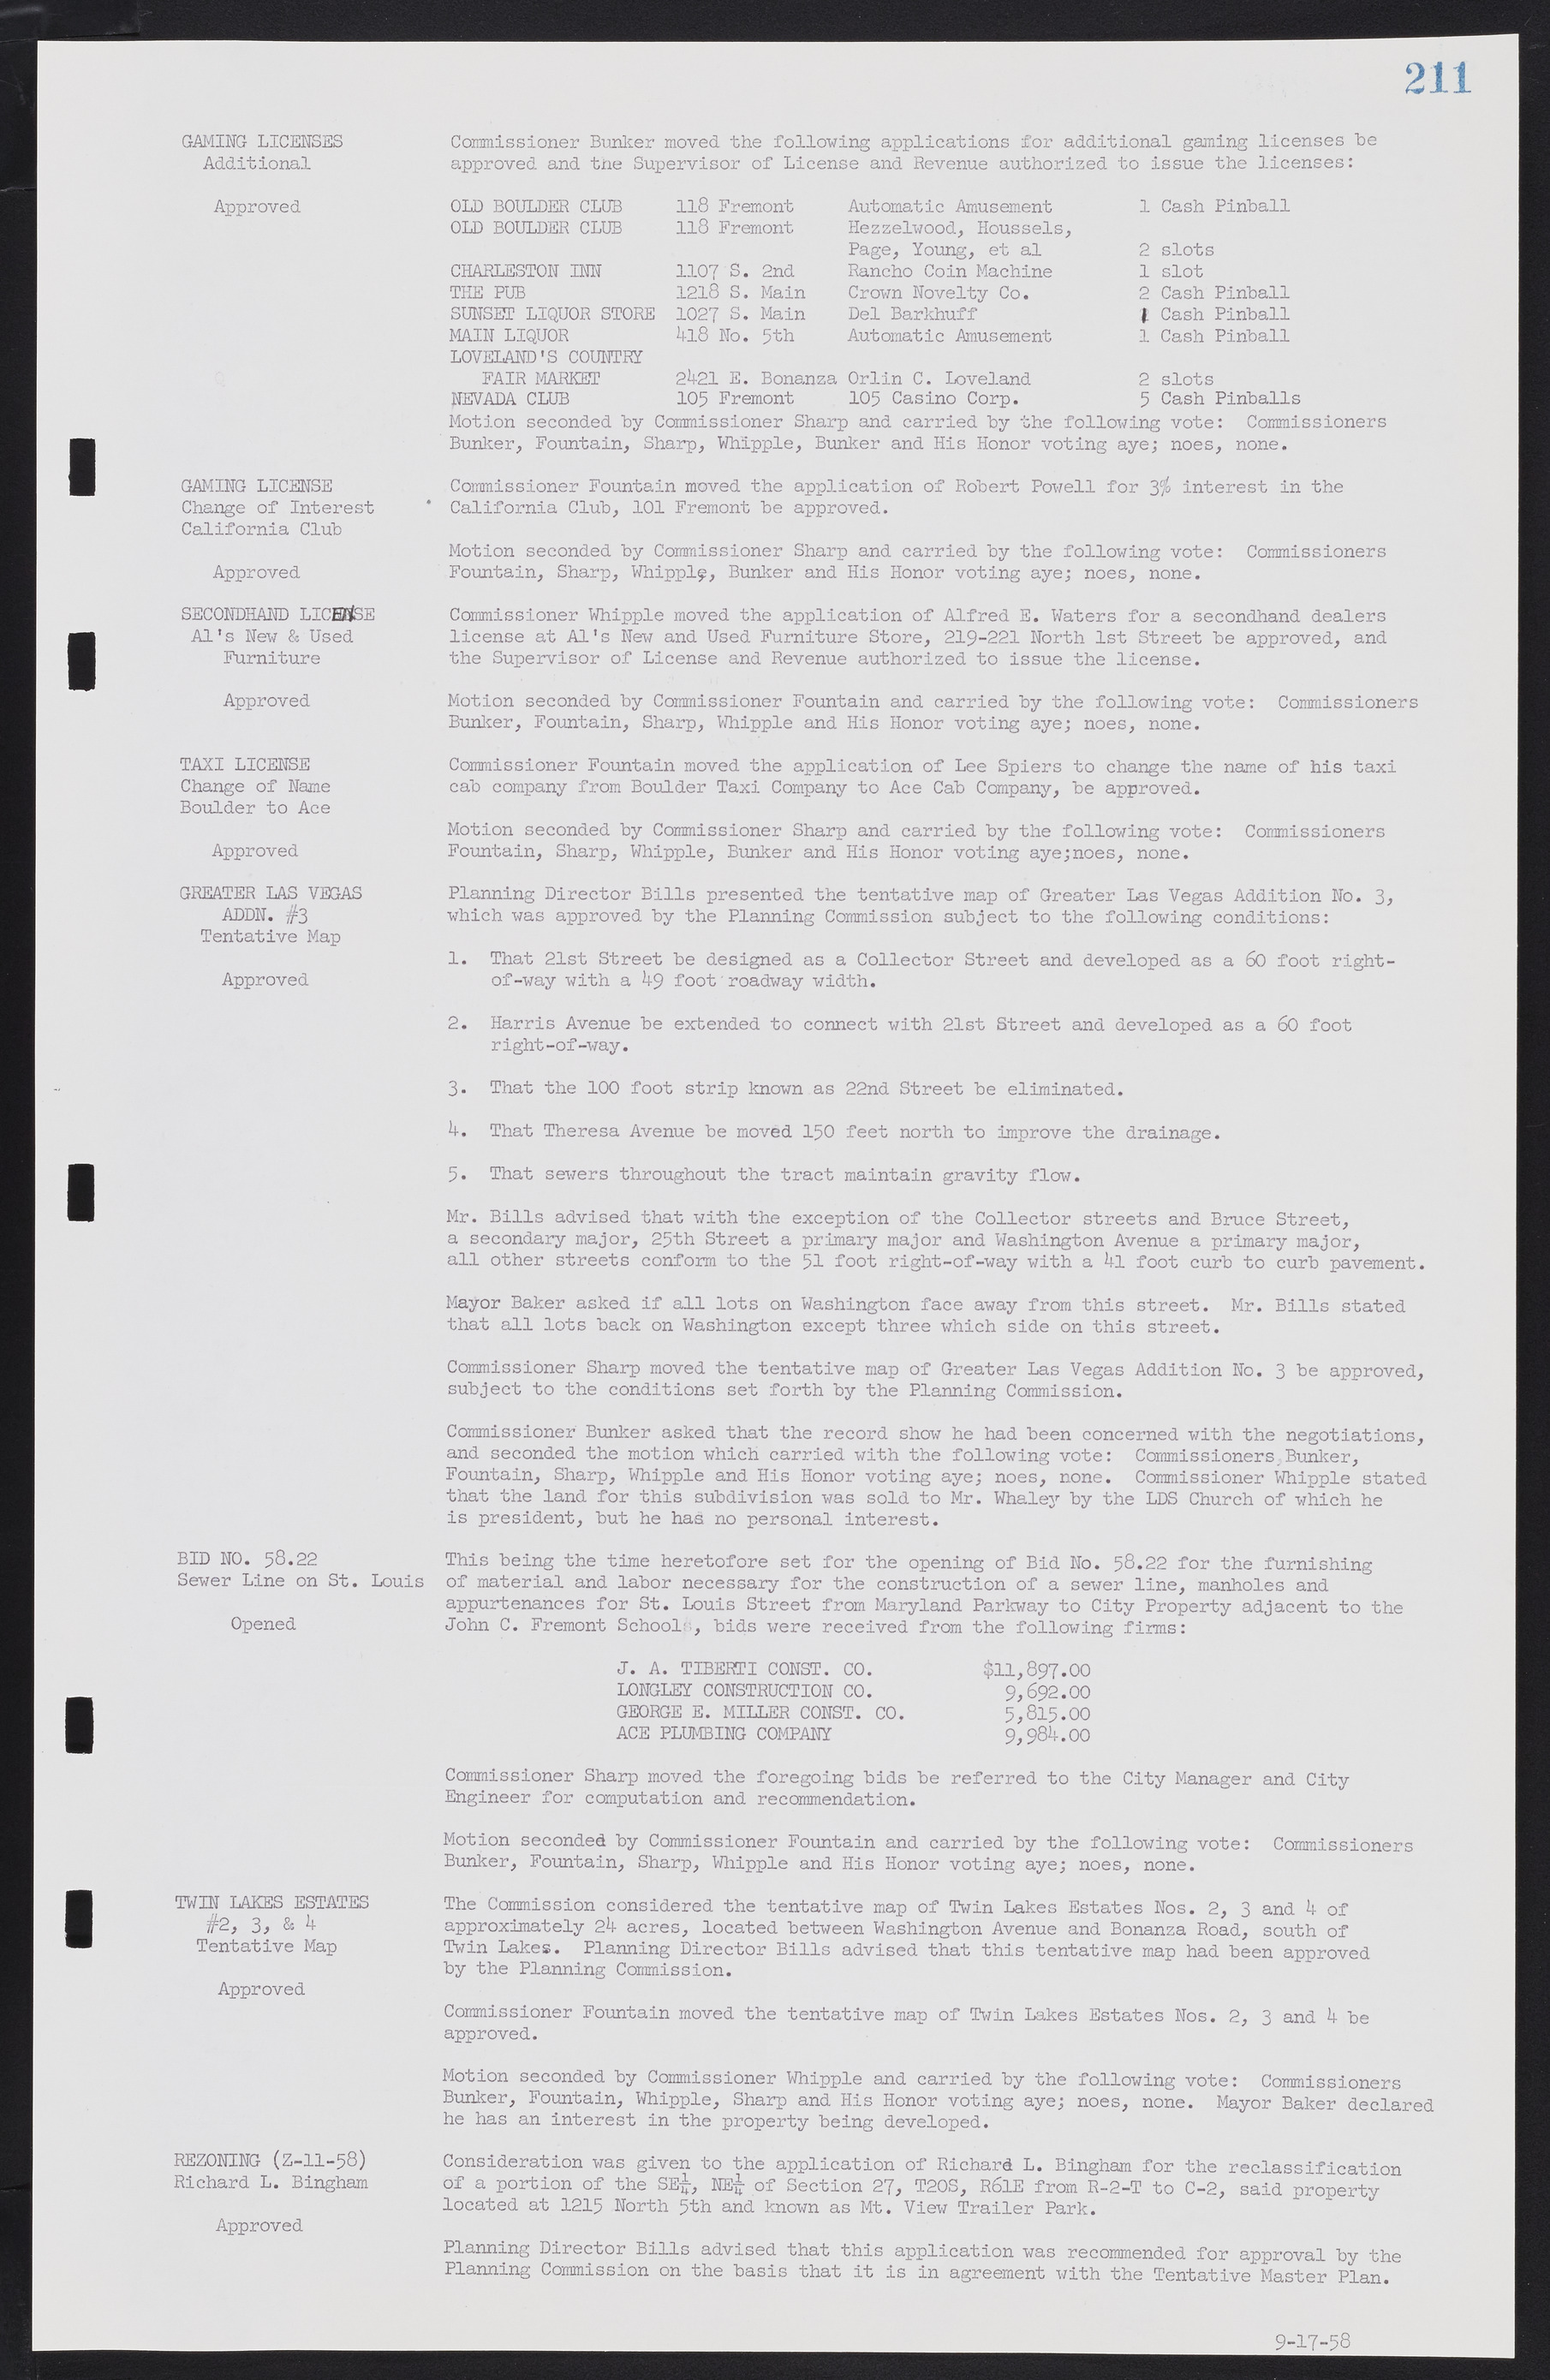 Las Vegas City Commission Minutes, November 20, 1957 to December 2, 1959, lvc000011-215